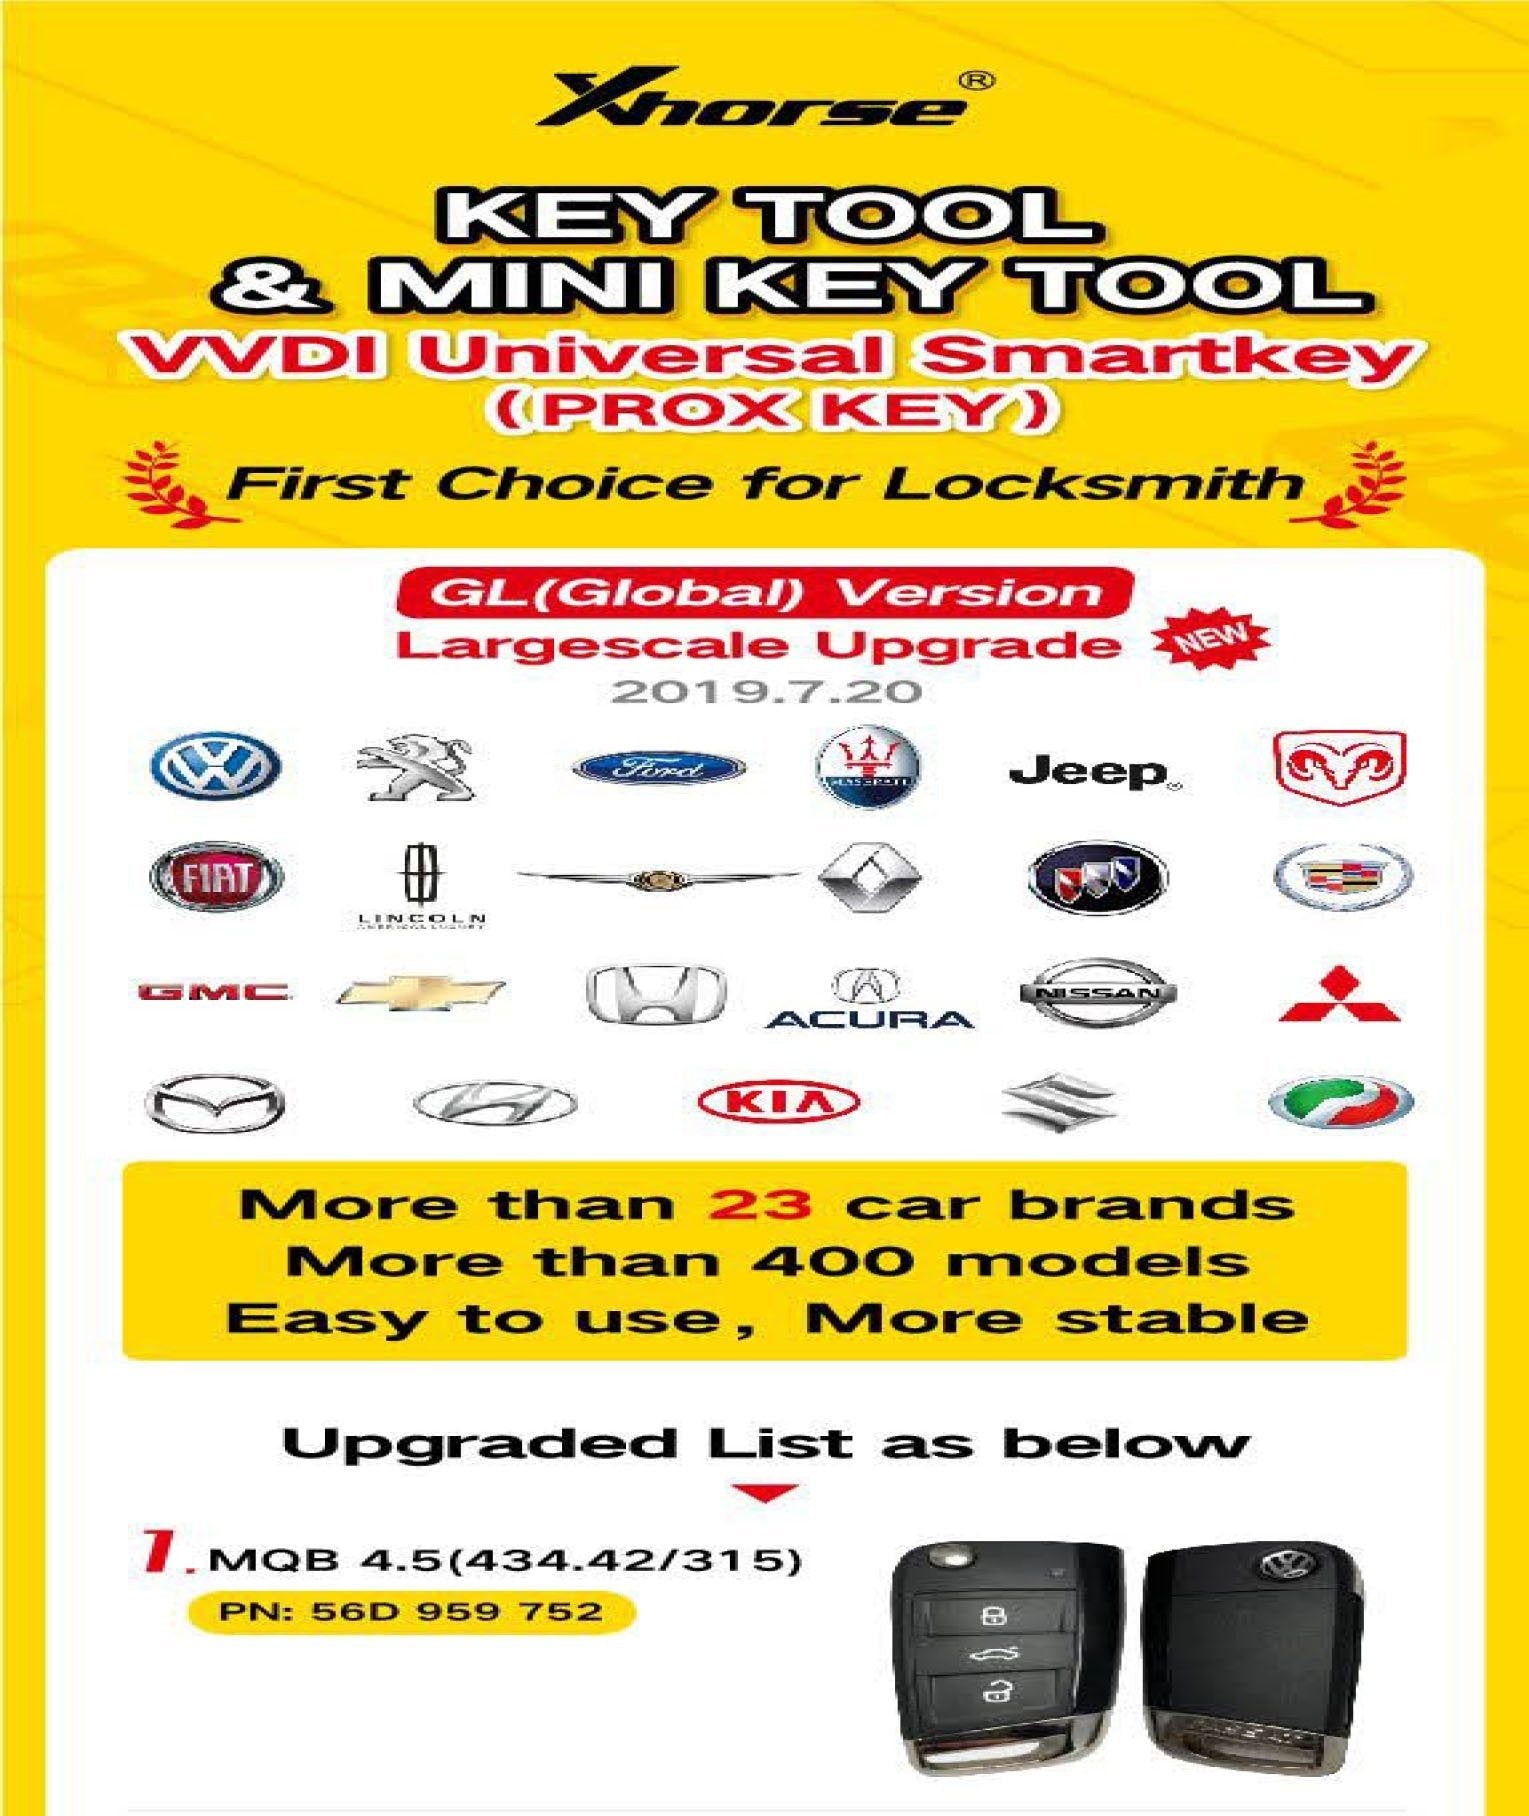 Knife Style / 3-Button Universal Smart Key w/ Proximity Function for VVDI Key Tool (Xhorse) - UHS Hardware